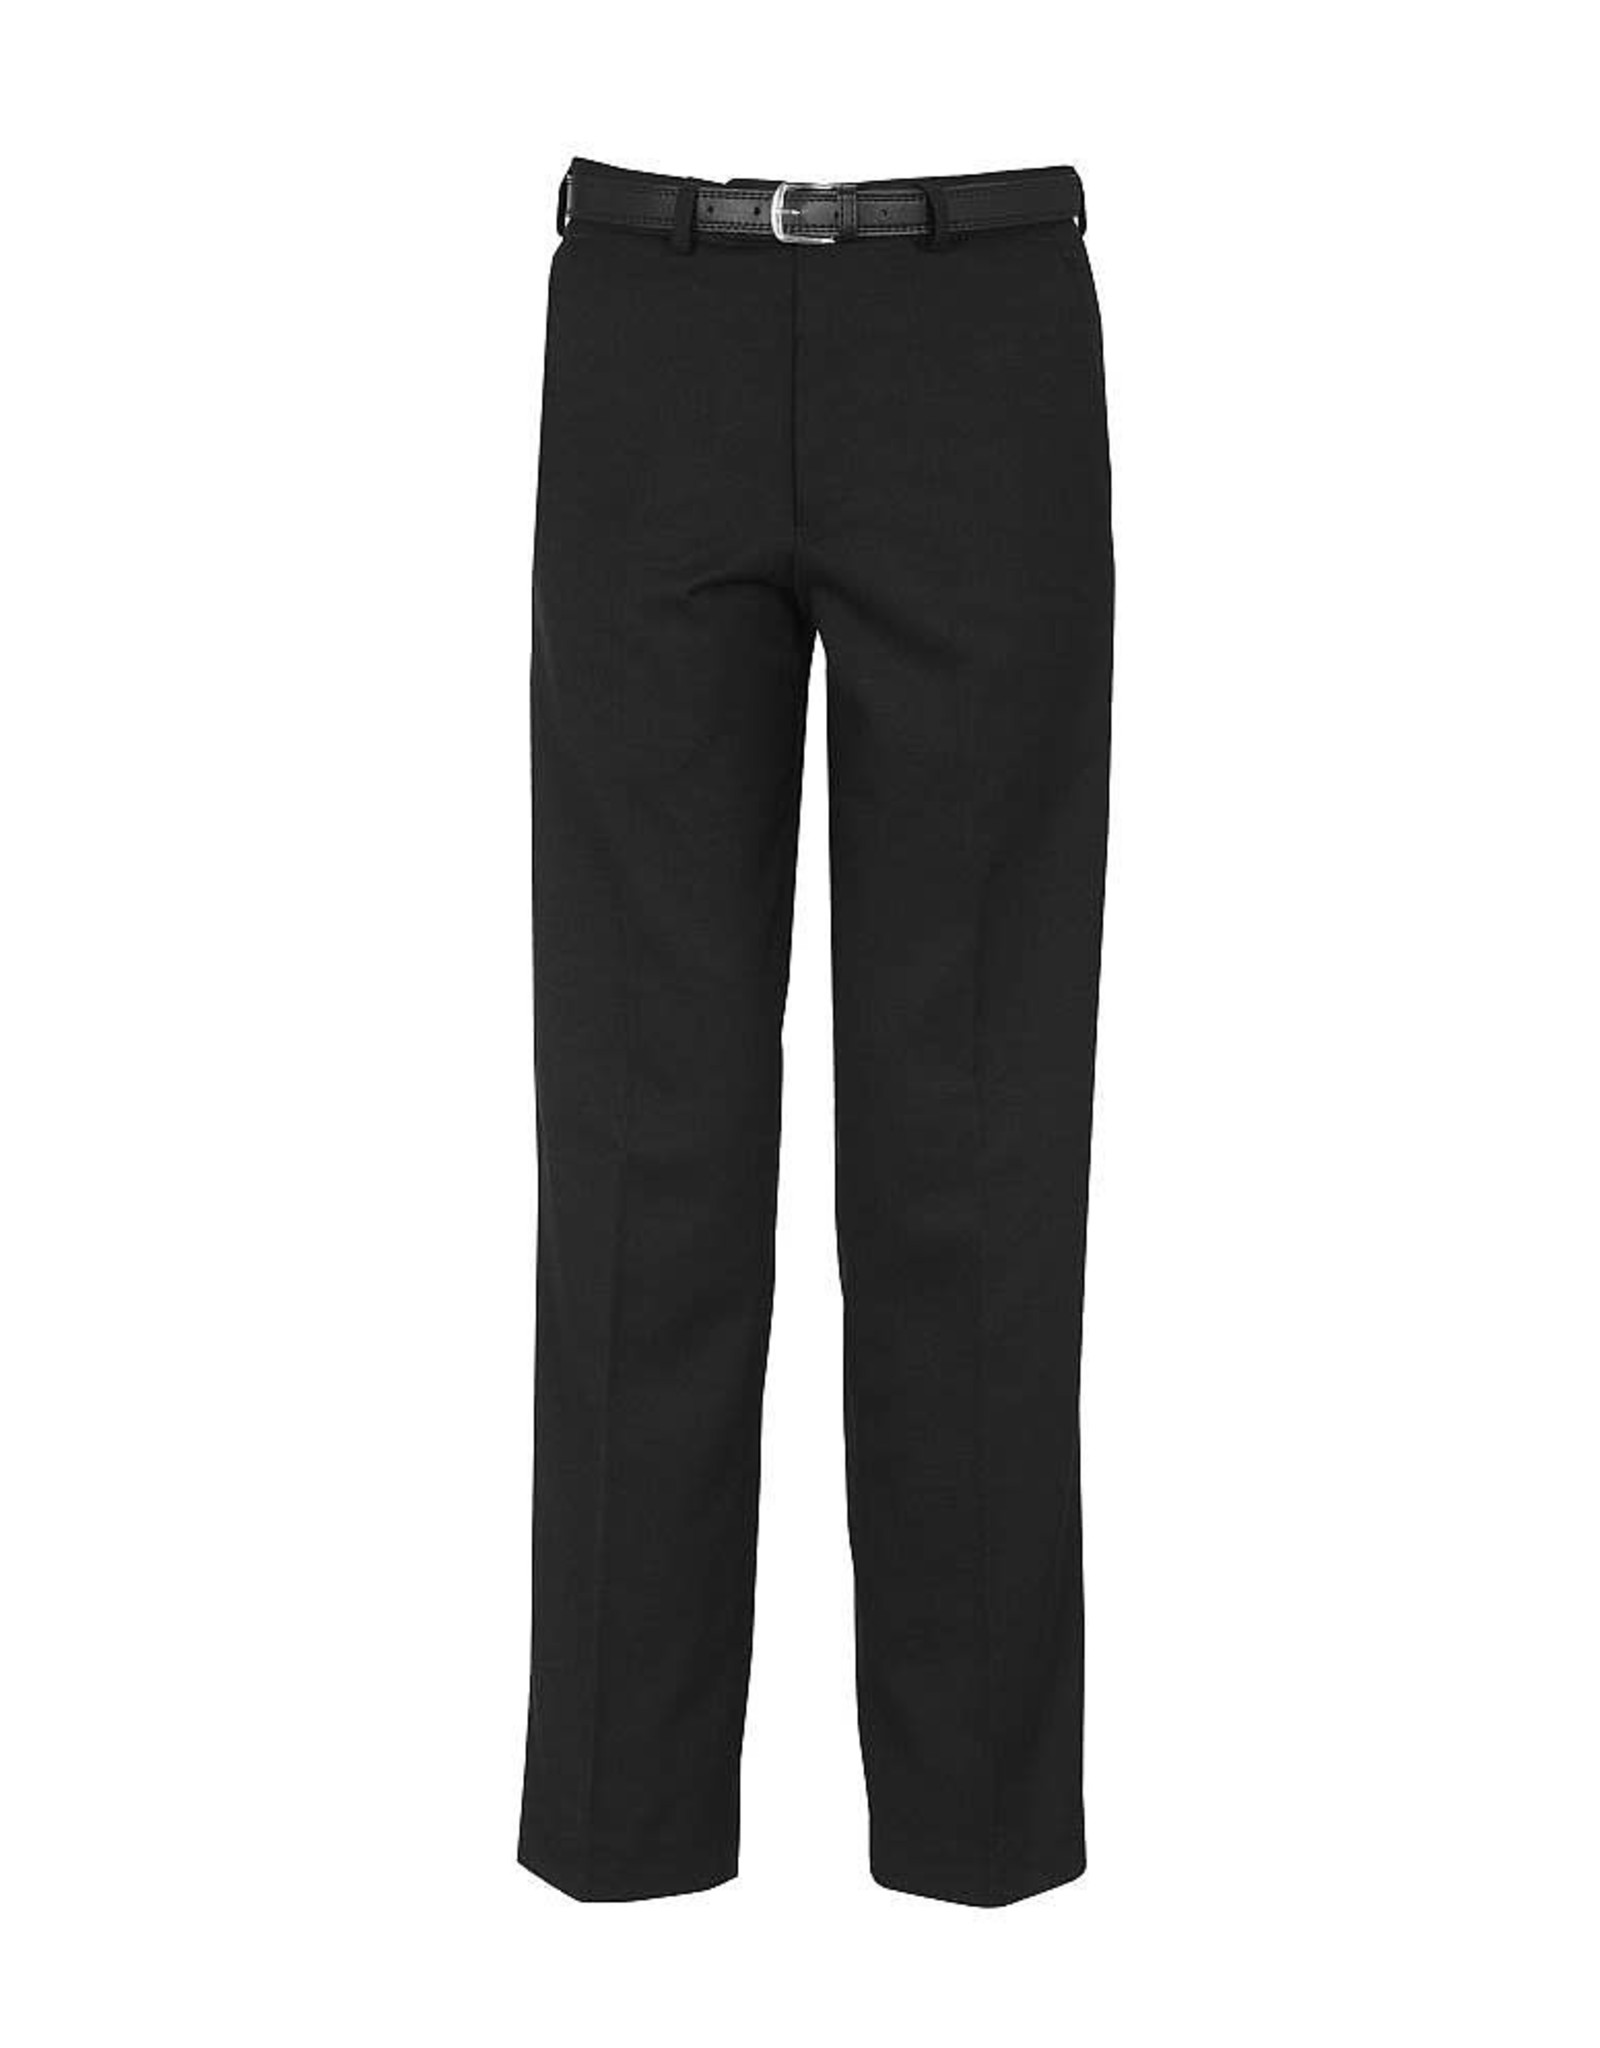 NZMA // MENS DRESS PANTS | DG Store